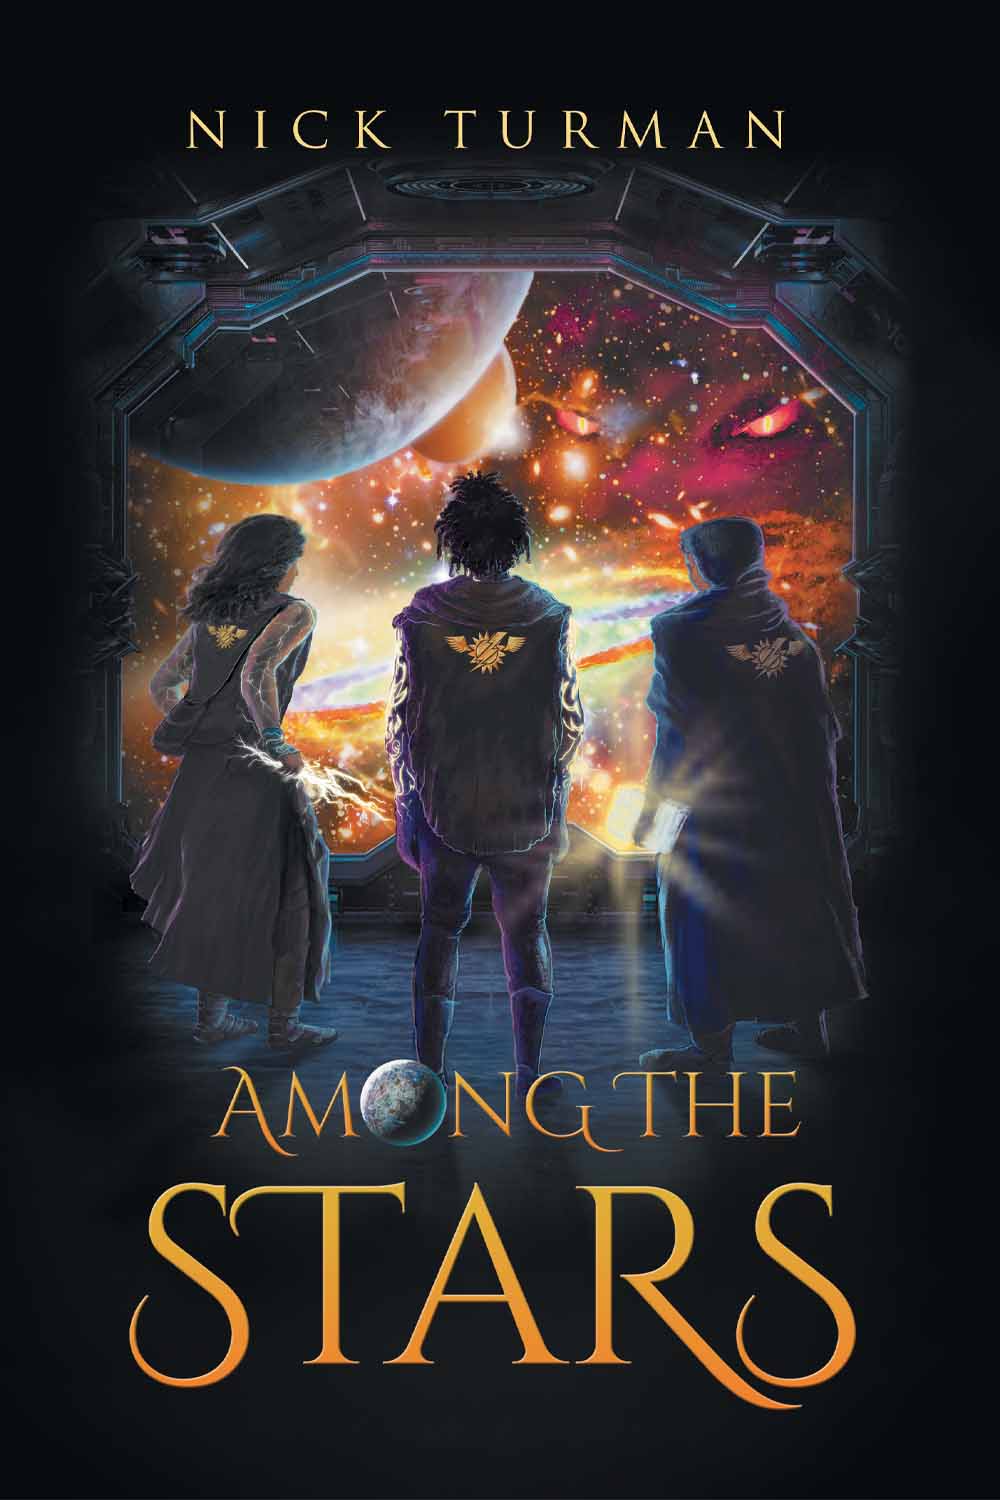 Among The Stars by Nick Turman